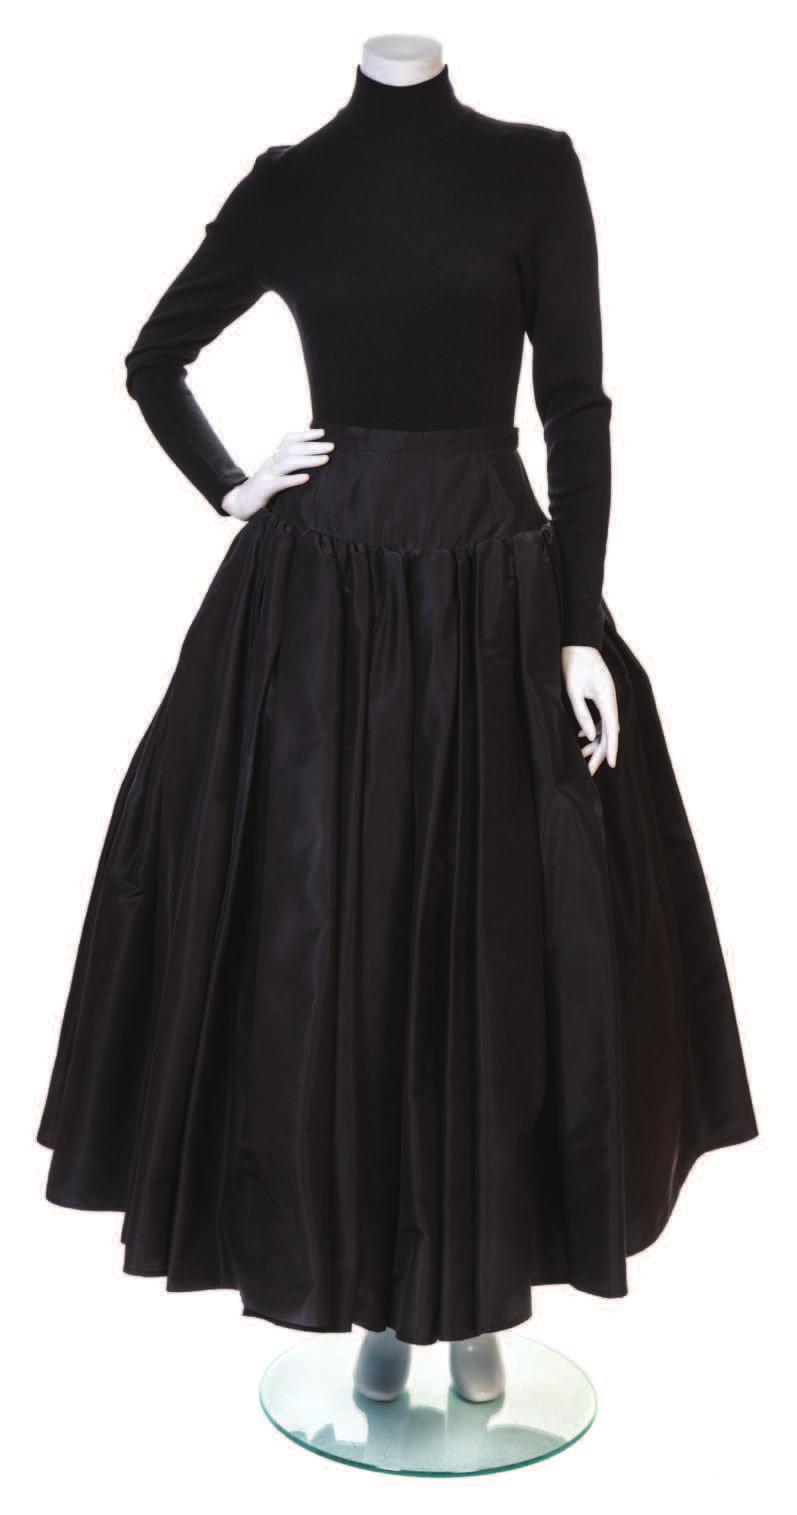 6 A Giambattista Valli Black Tweed Dress, with a crew neckline, cap sleeves, a decorative contrasting black hem and a back zip closure. Labeled: Giambattista Valli. Size 40.